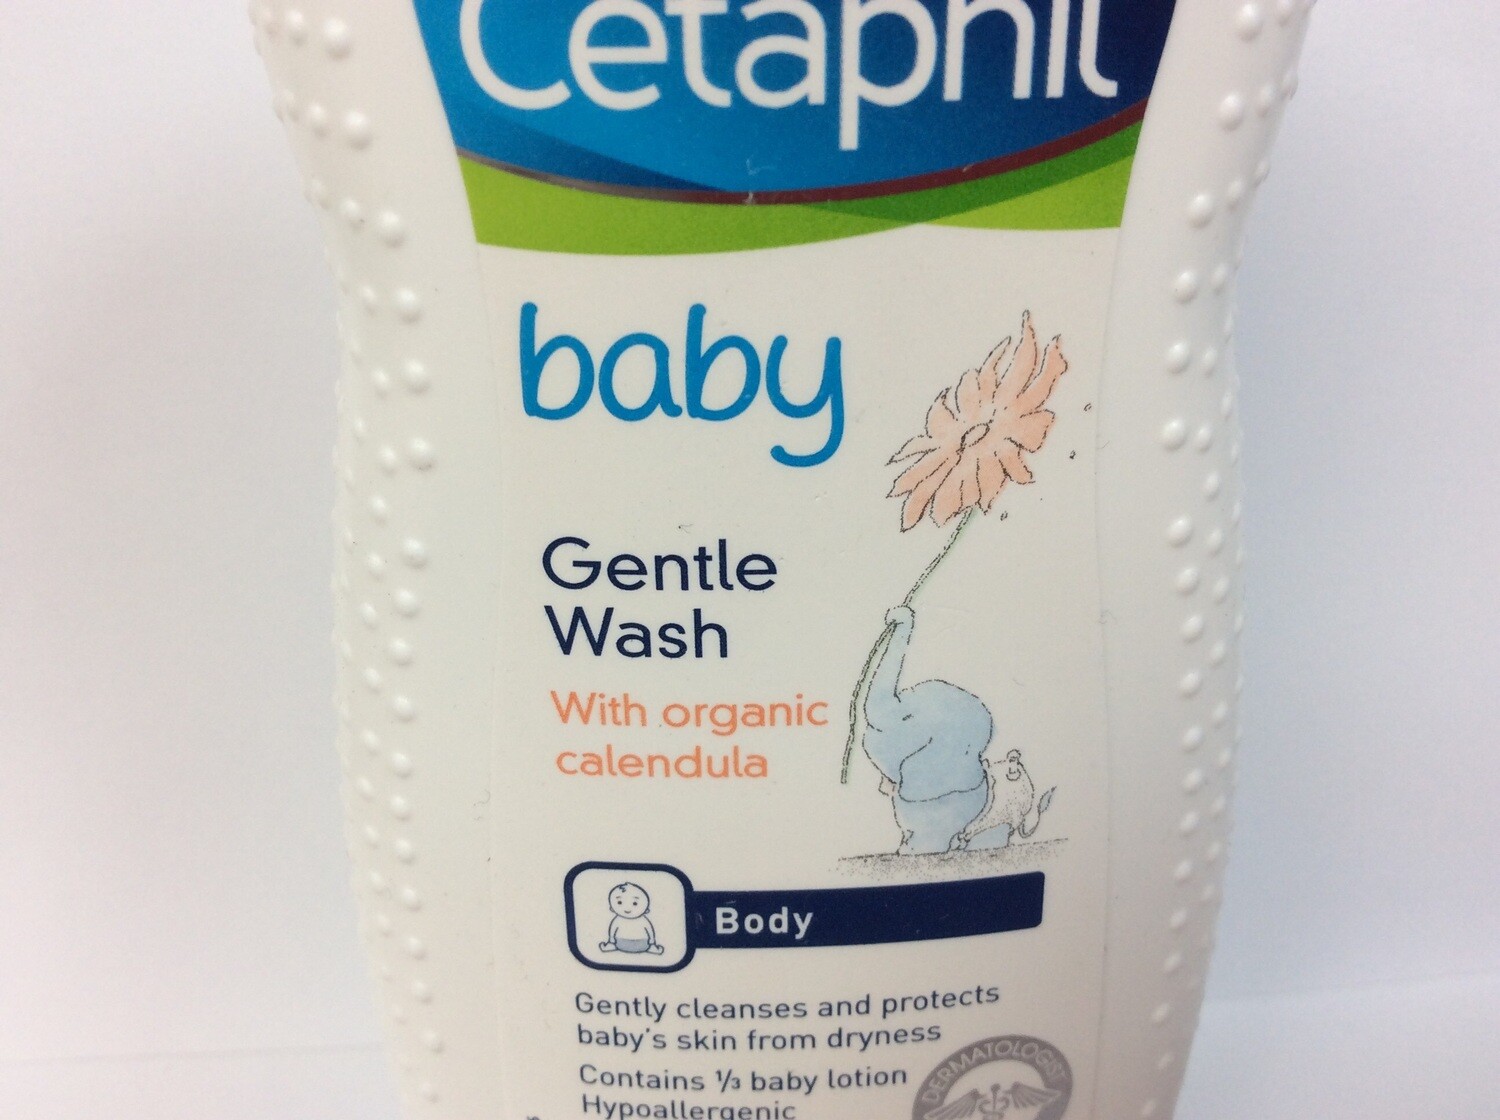 CETAPHIL BABY GENTLE WASH